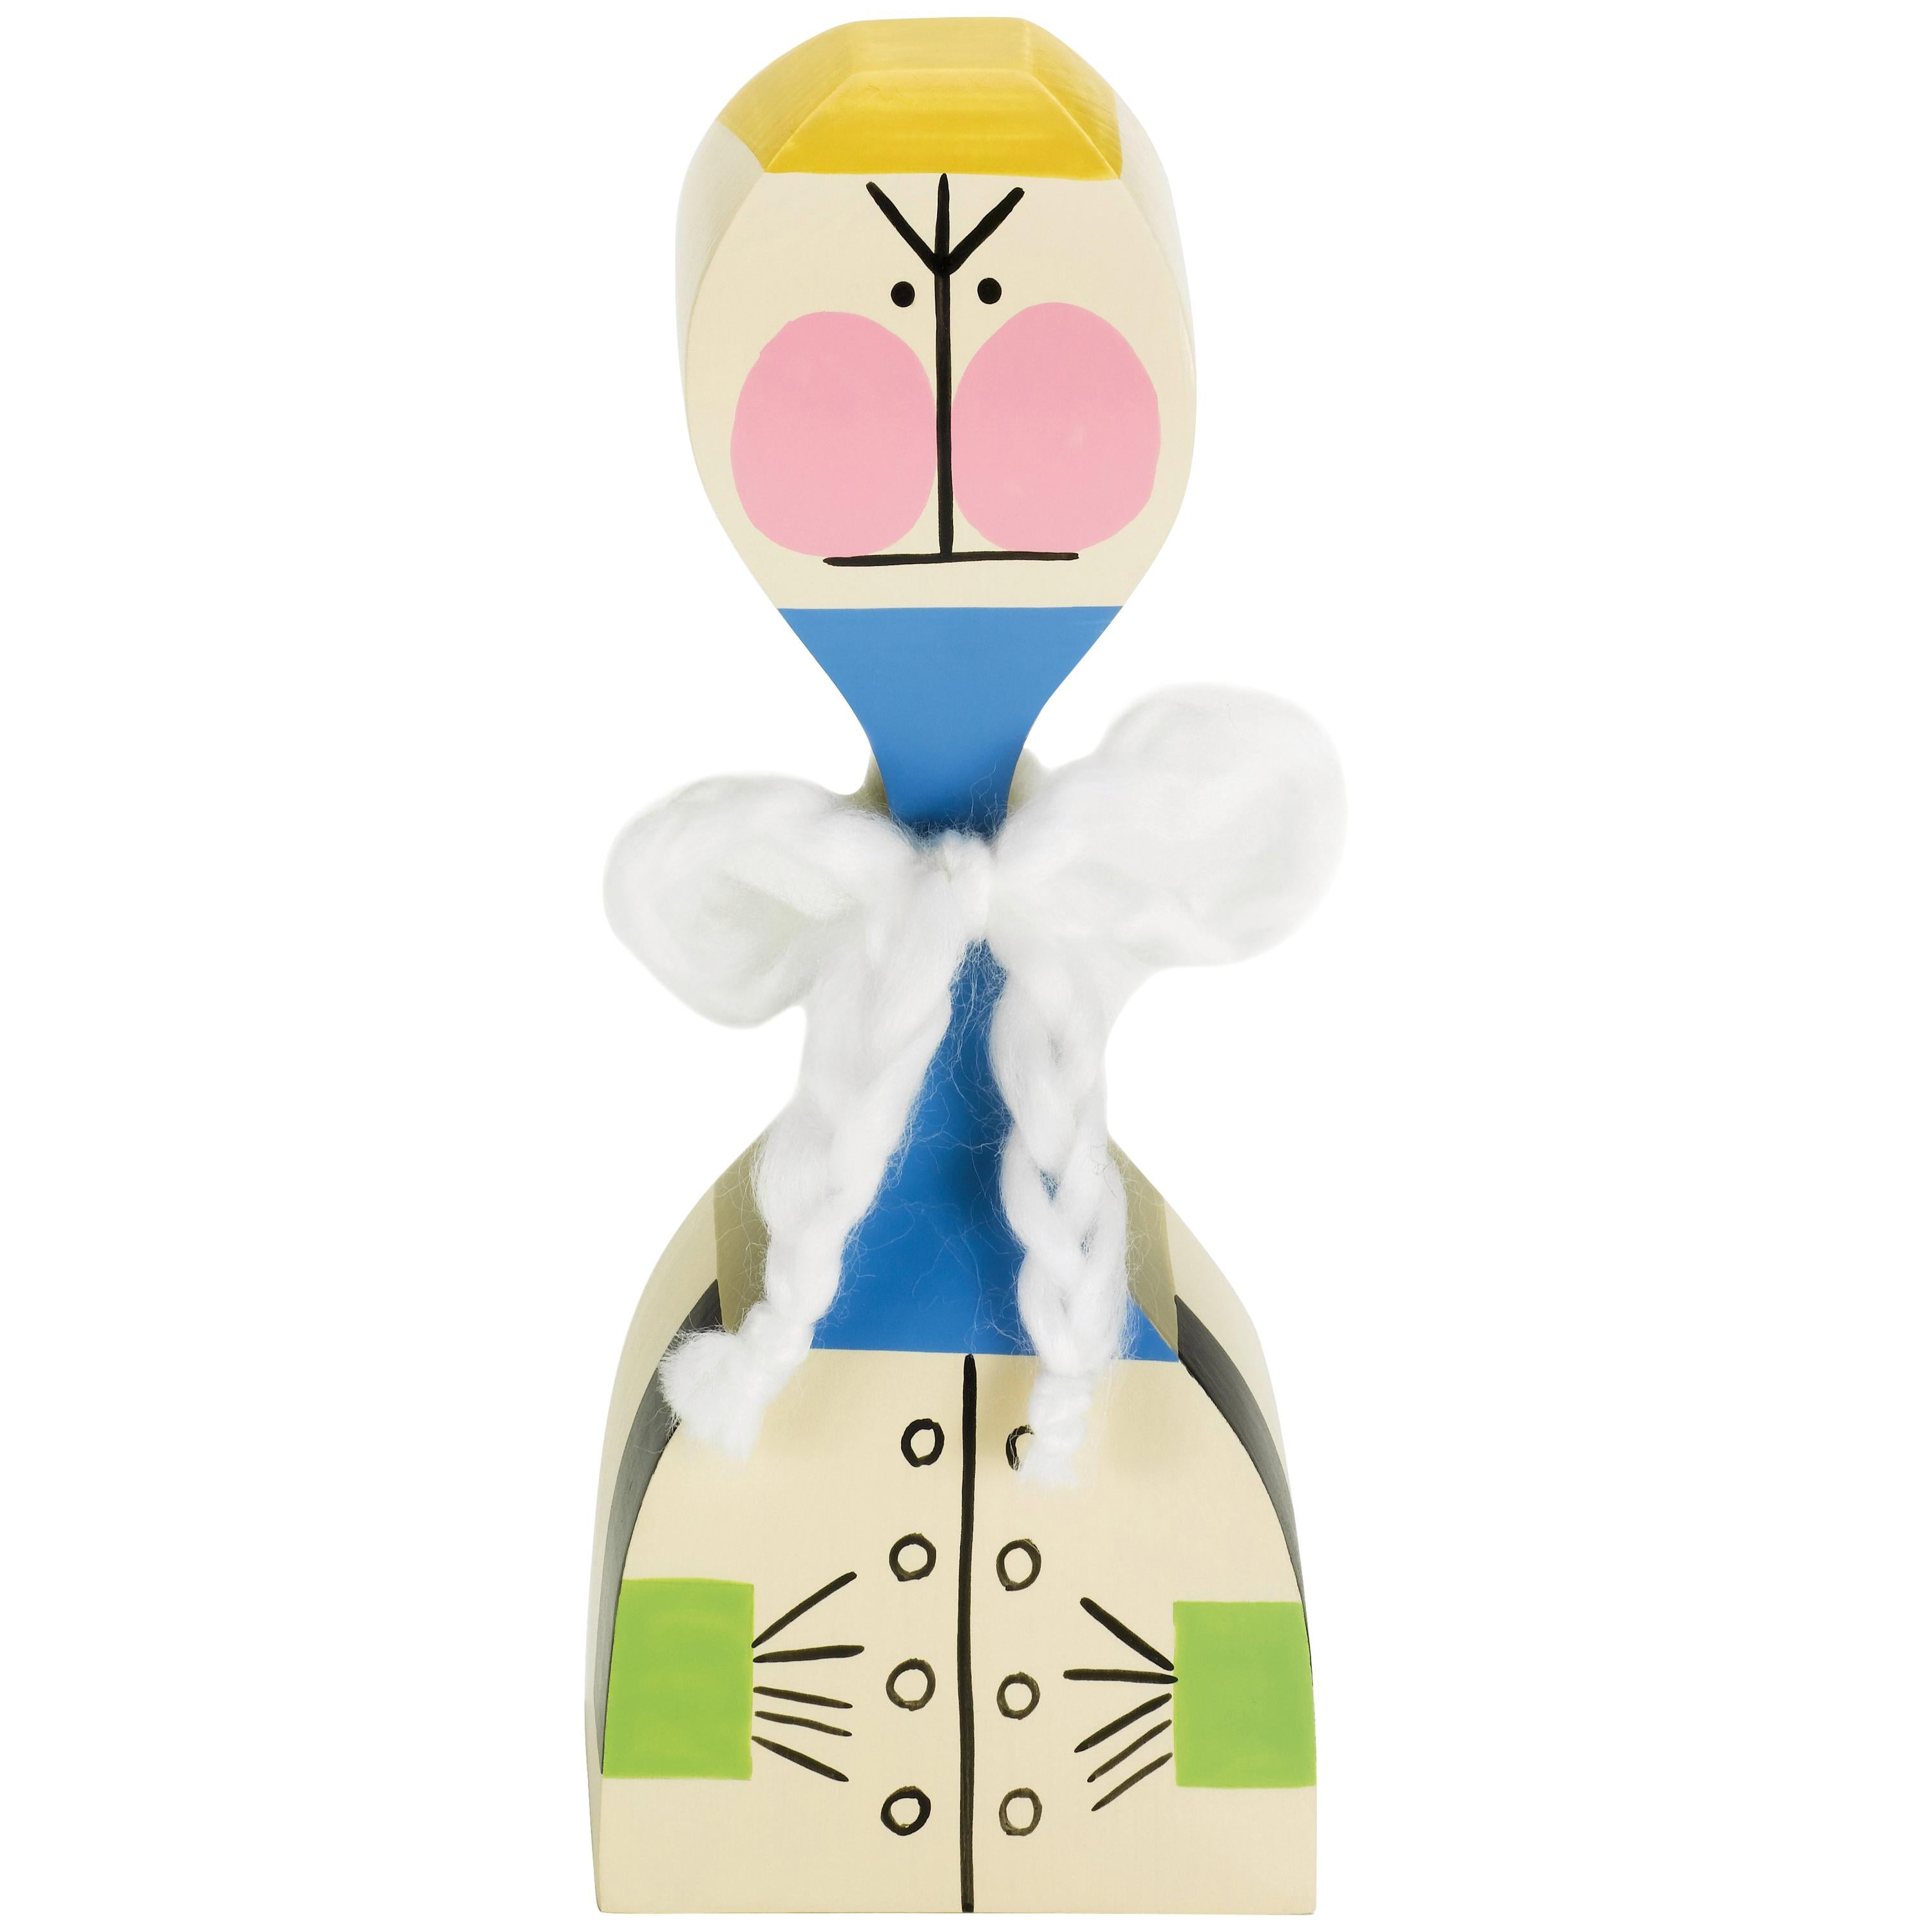 Vitra Wooden Doll No. 21 by Alexander Girard im Angebot